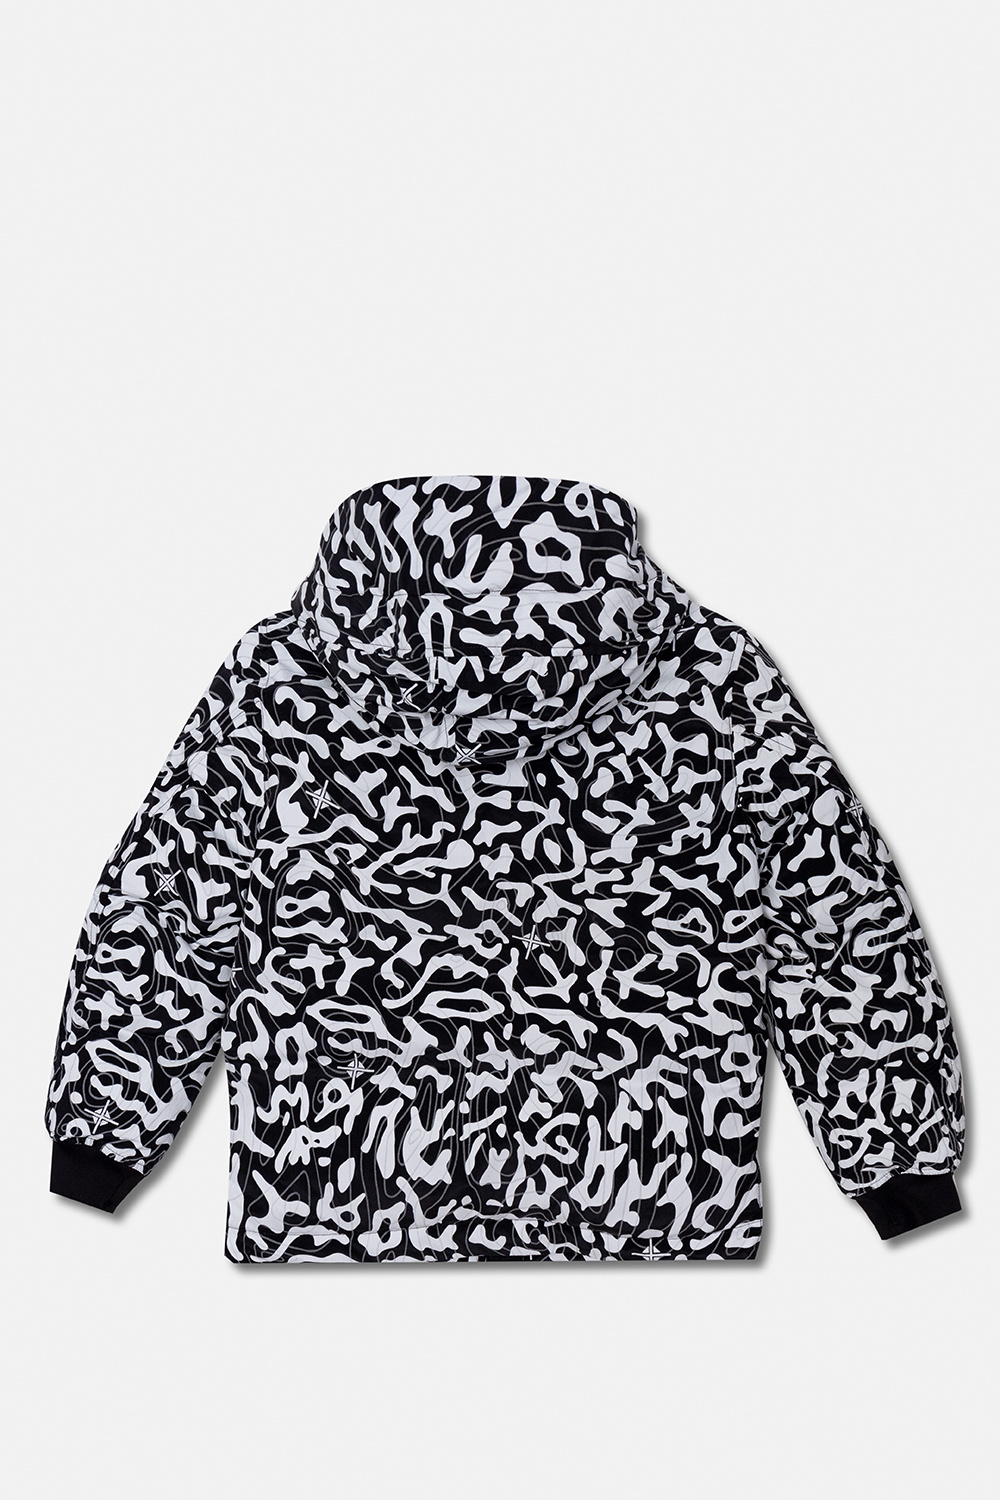 We11done embroidered logo sweatshirt Hooded down Duvet jacket